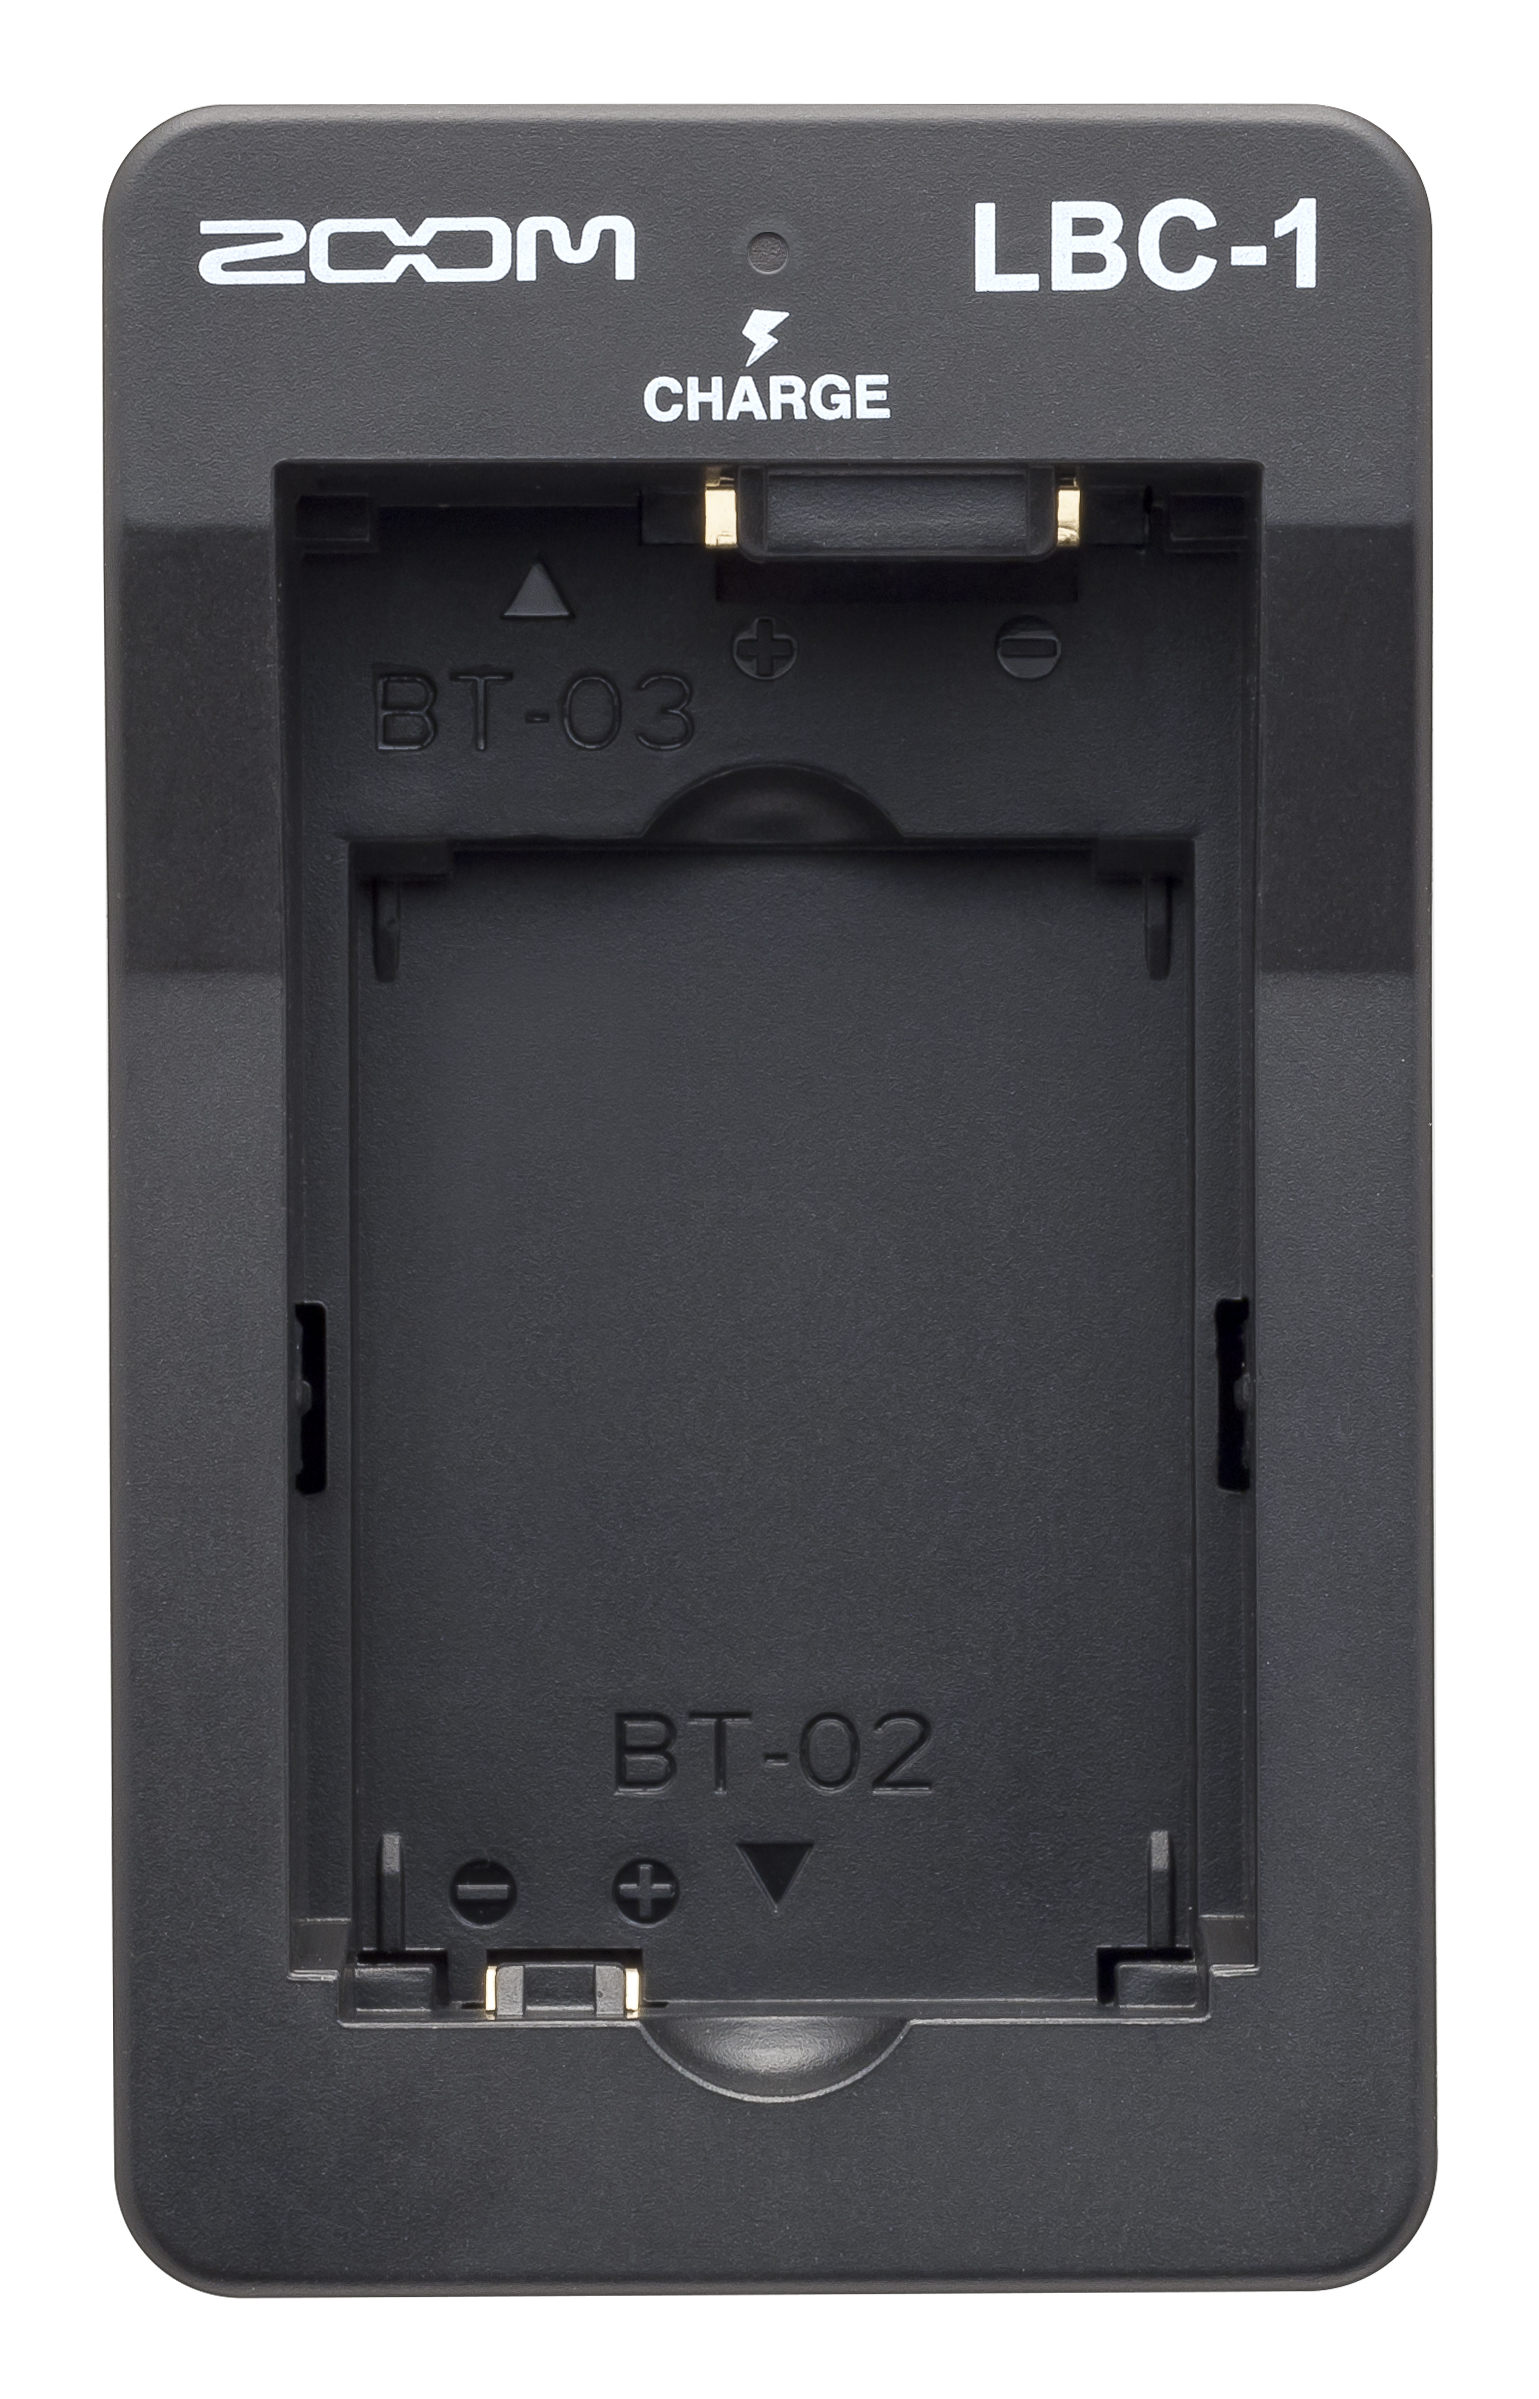 Zoom Lbc1 Chargeur Batterie Q8 - Battery charger - Variation 2